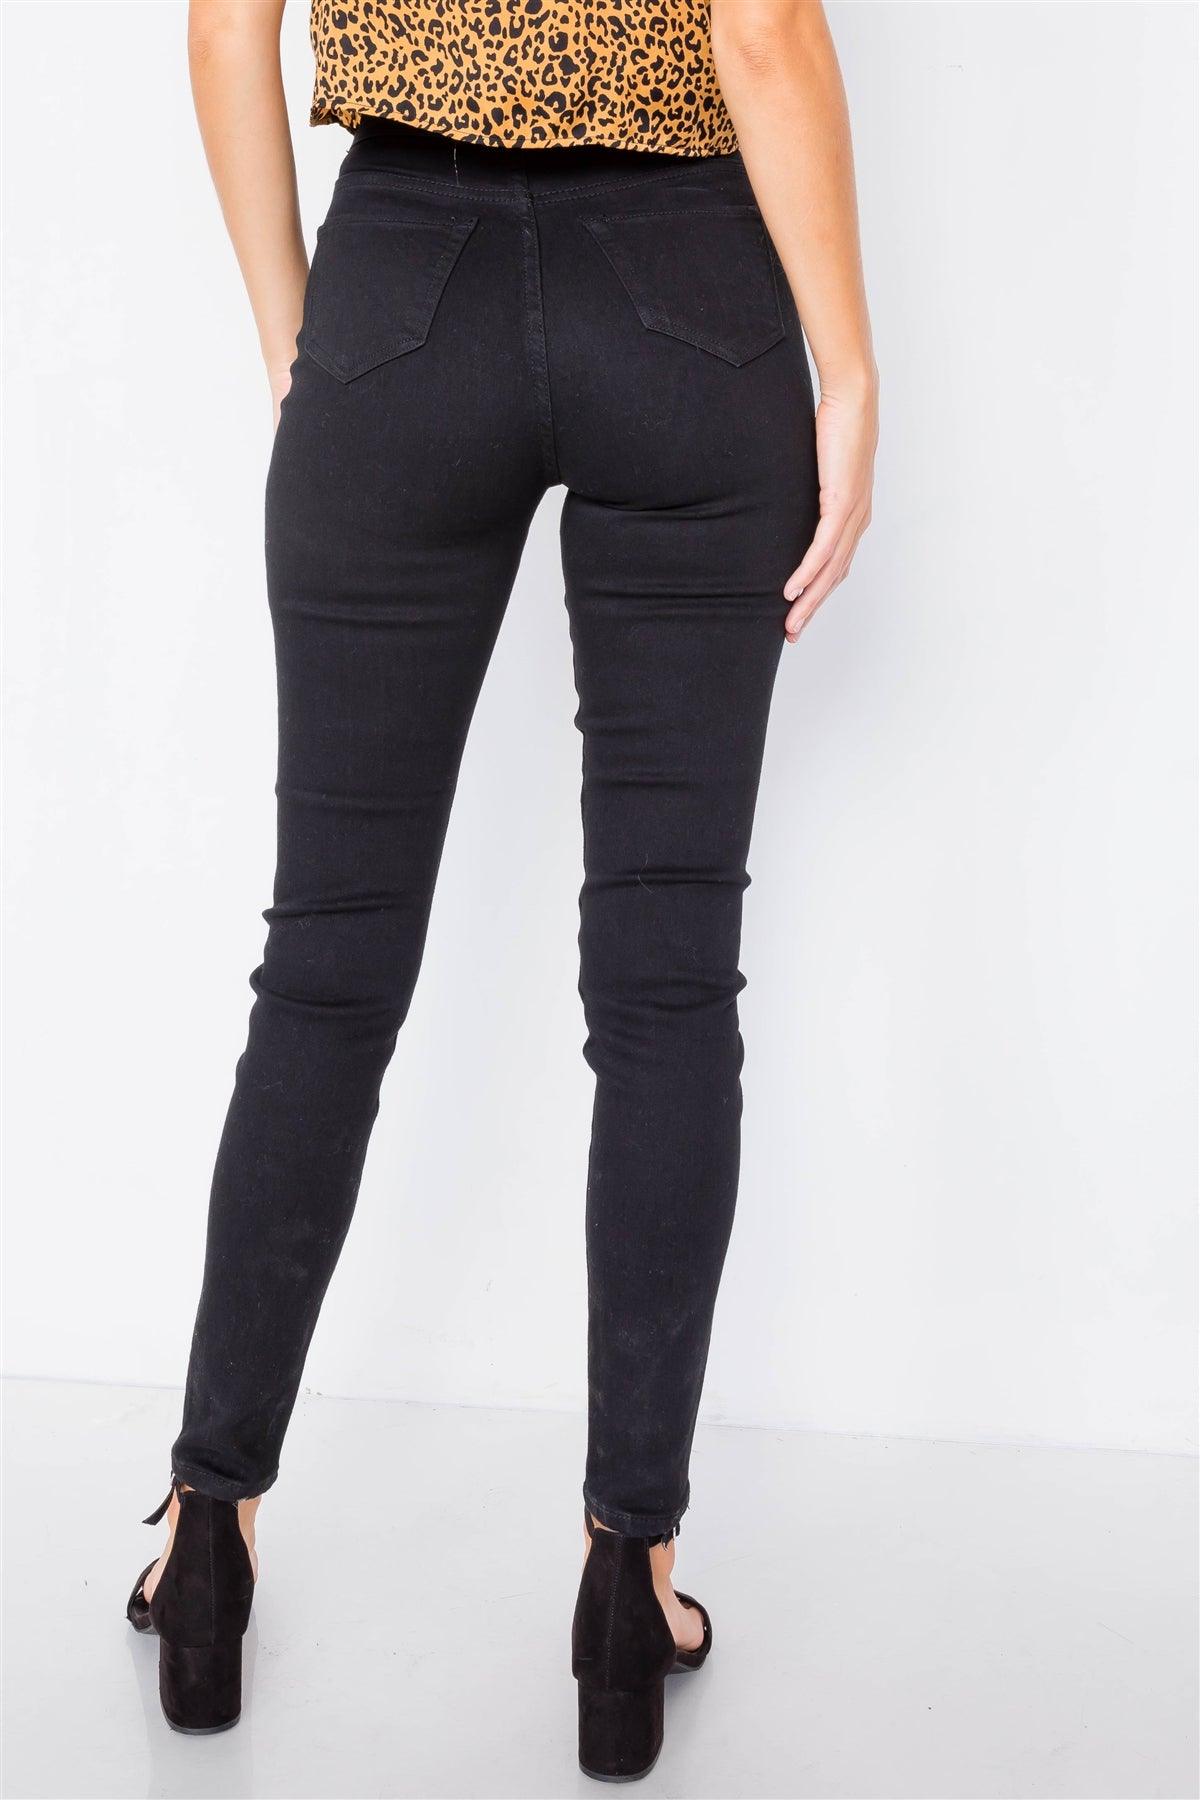 Solid Vintage High-Waist Basic Black Cotton Jeans